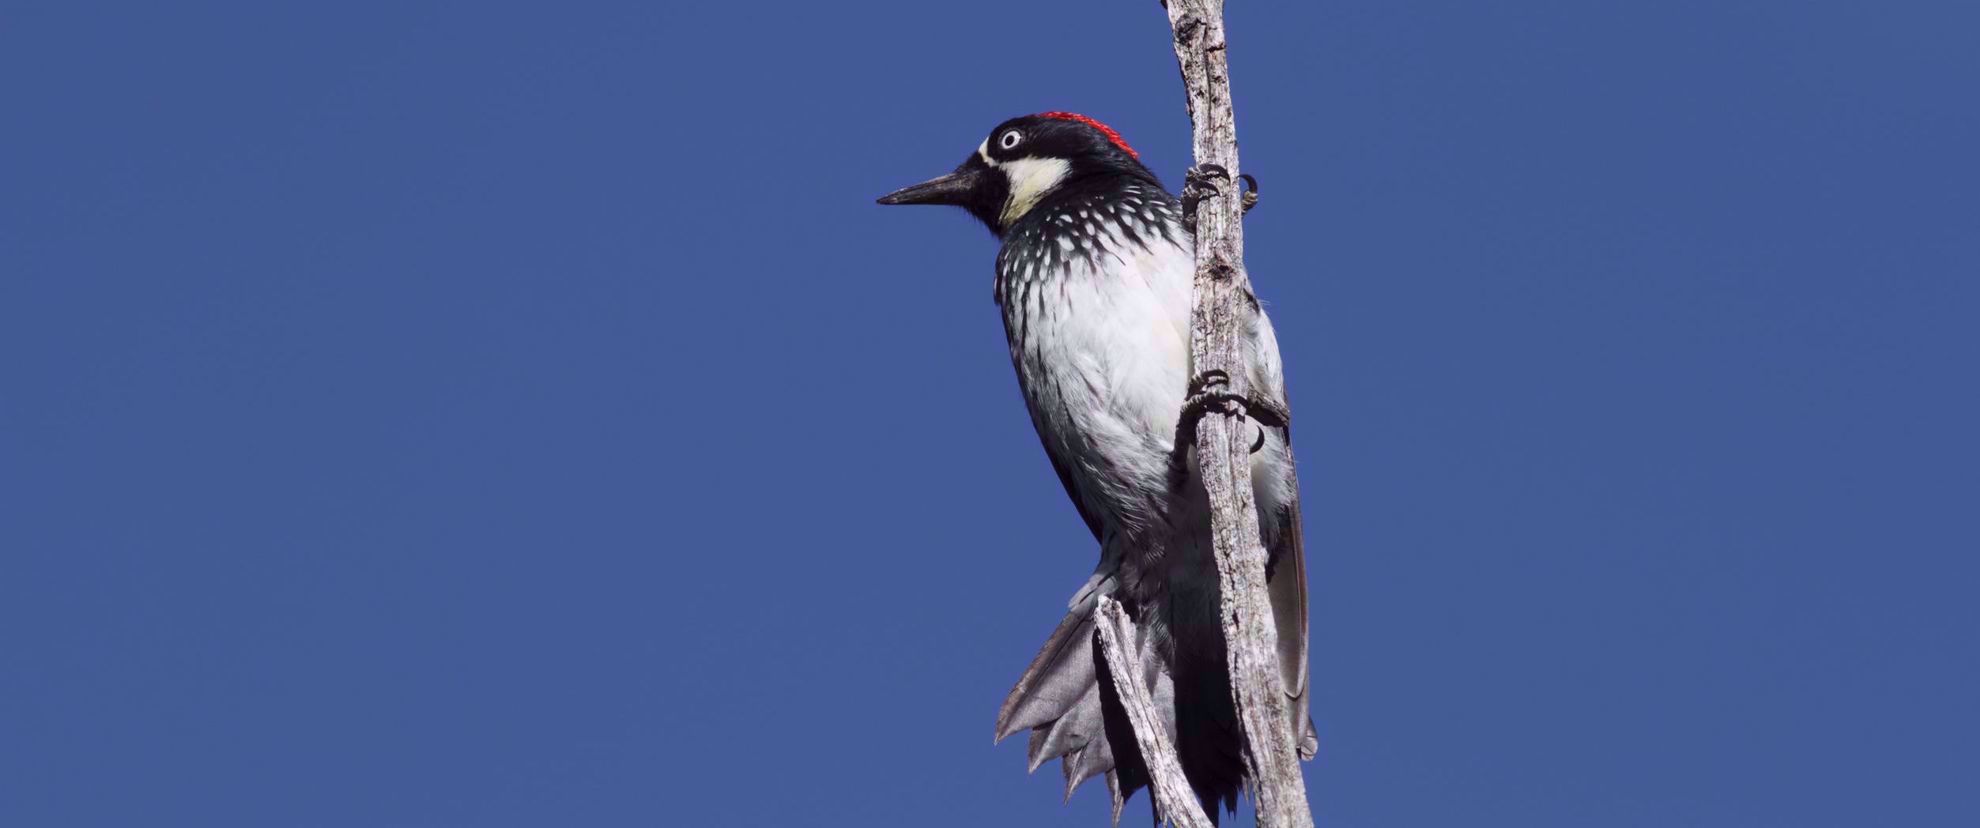 Acorn woodpecker in the Sonoran Desert